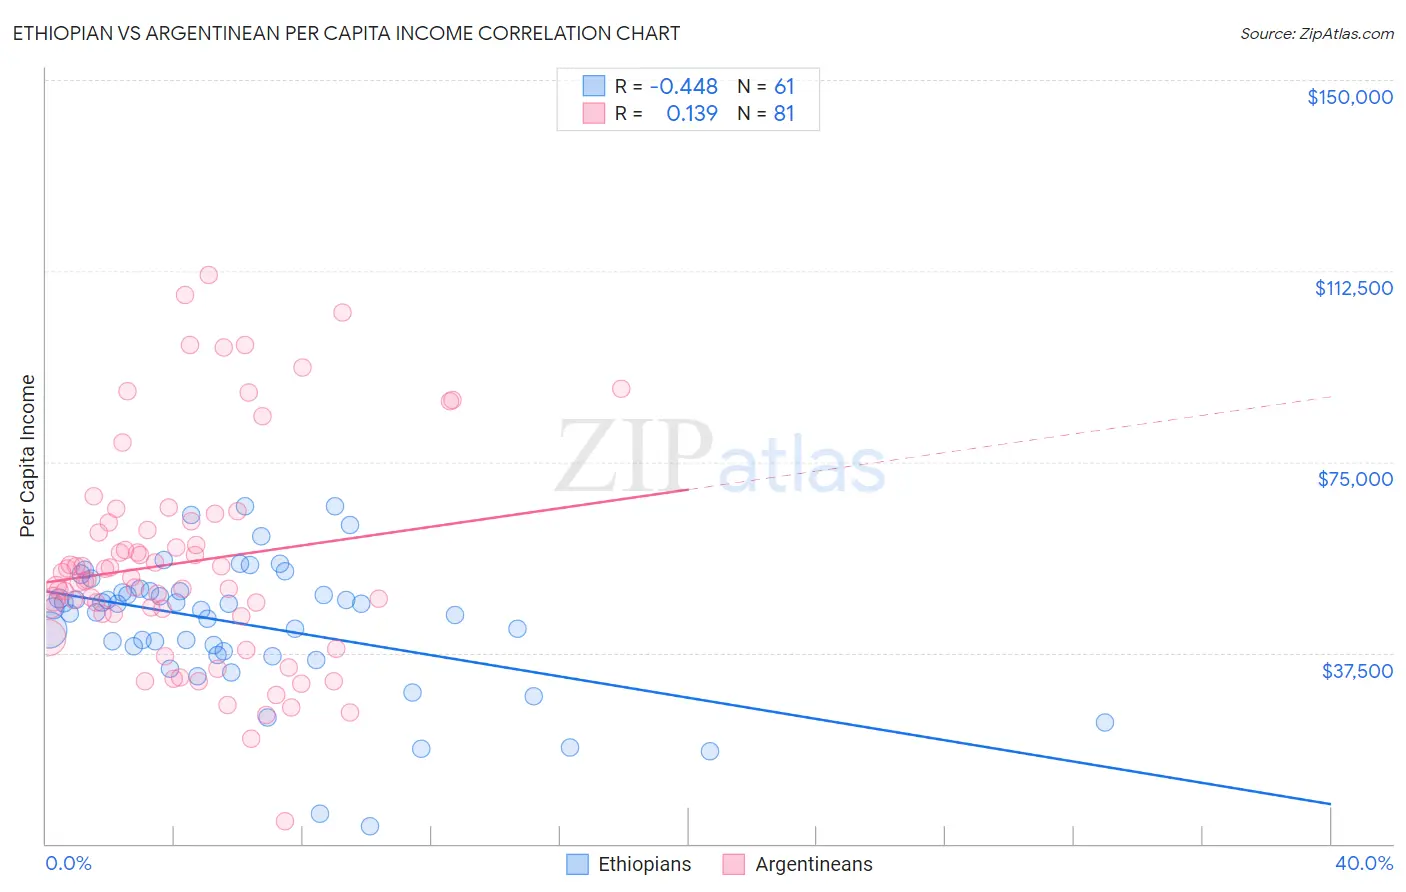 Ethiopian vs Argentinean Per Capita Income